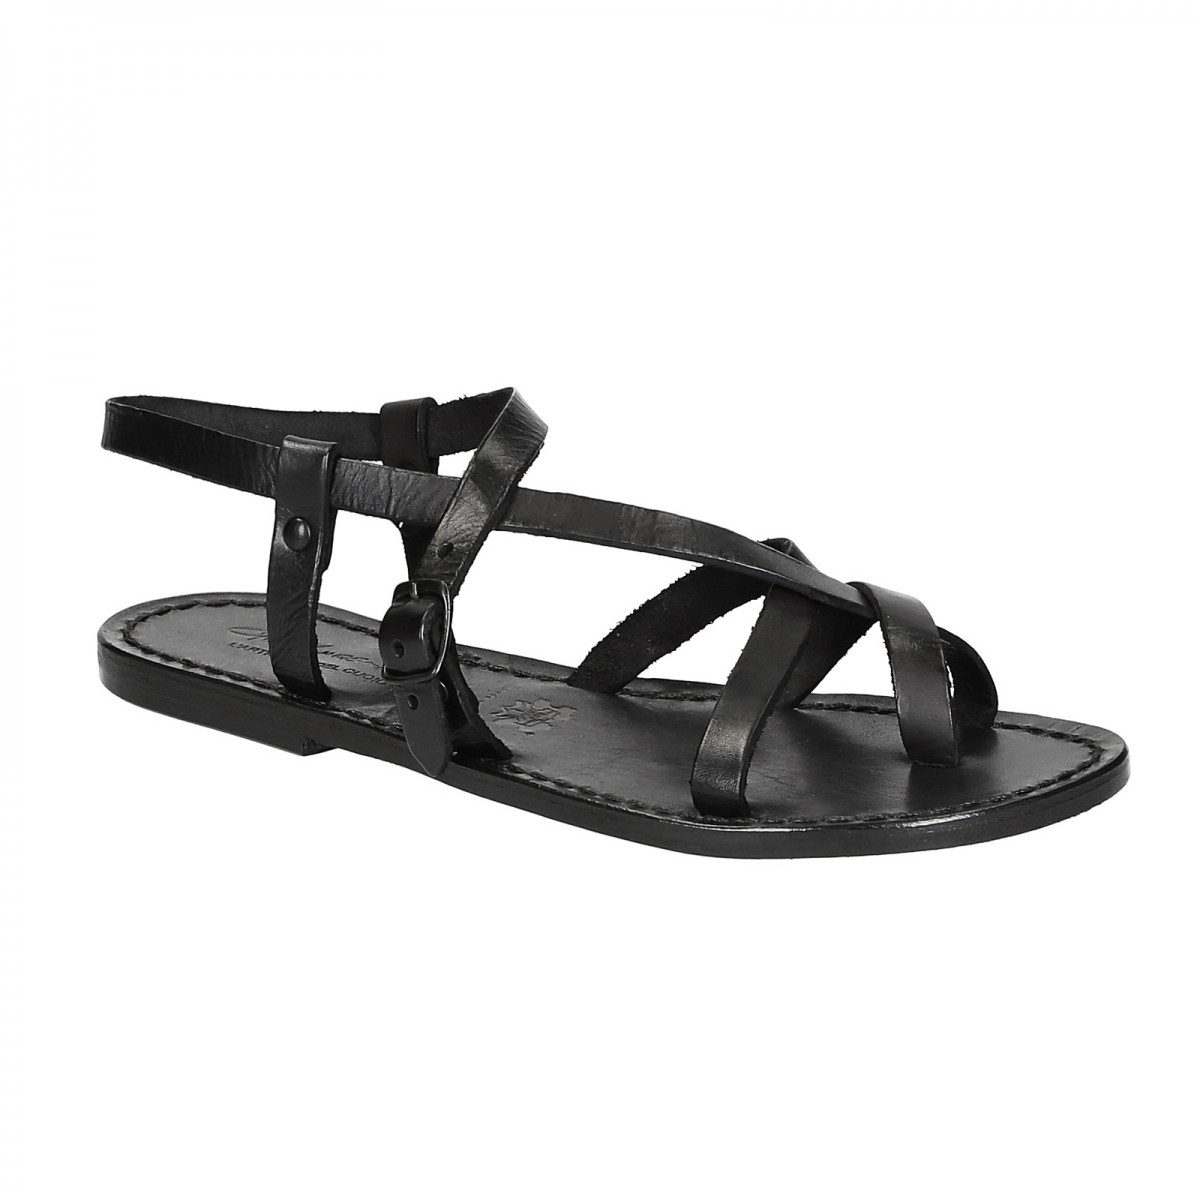 Buy > ladies strap sandals > in stock